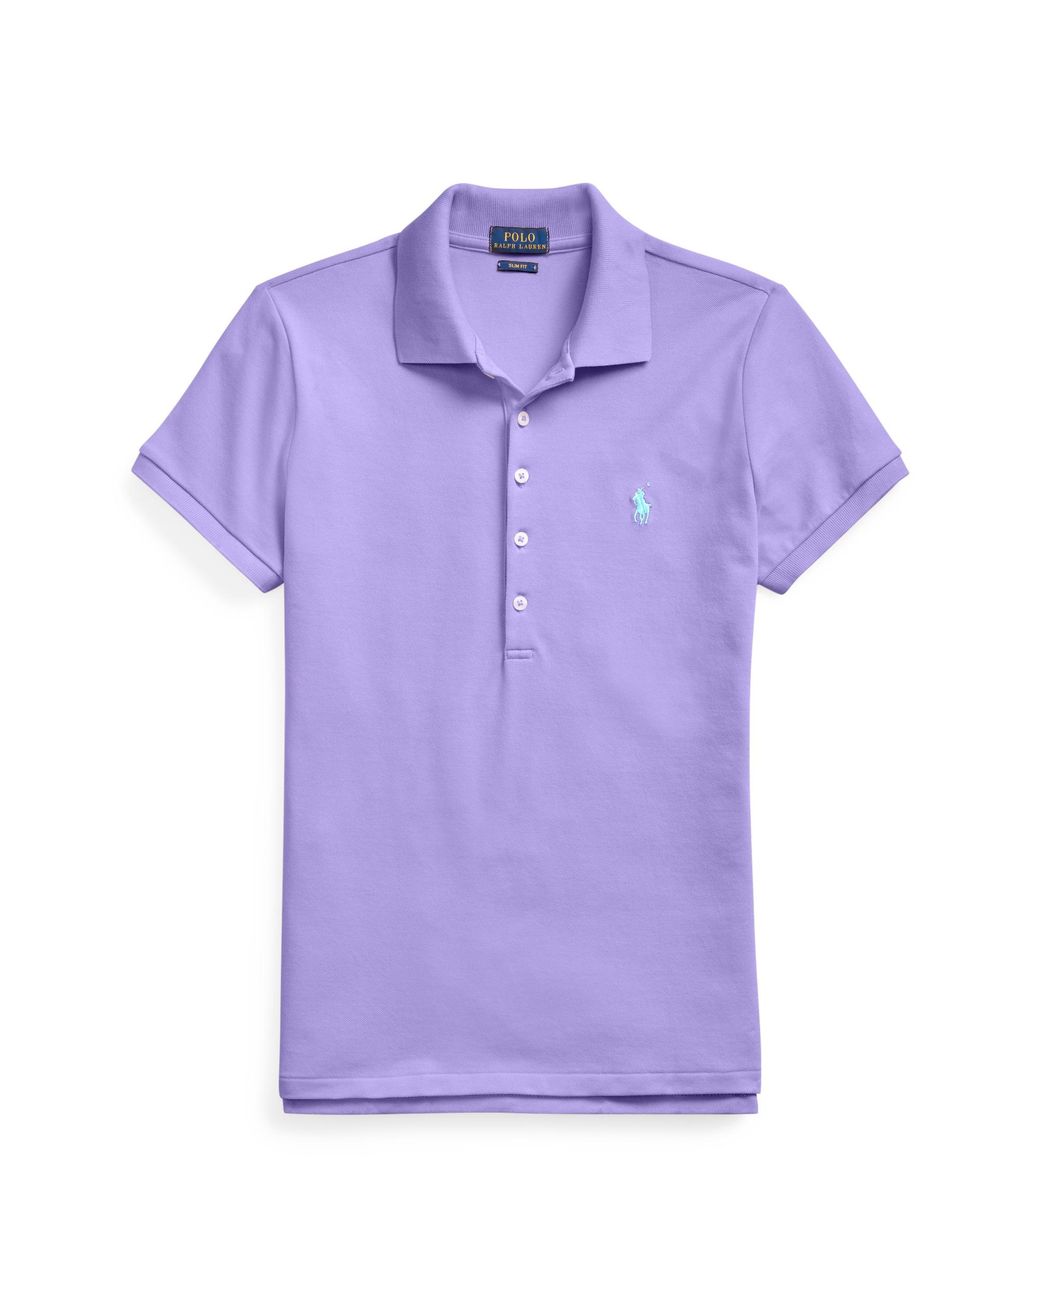 Ralph Lauren Cotton Slim Fit Polo Shirt in Purple - Lyst